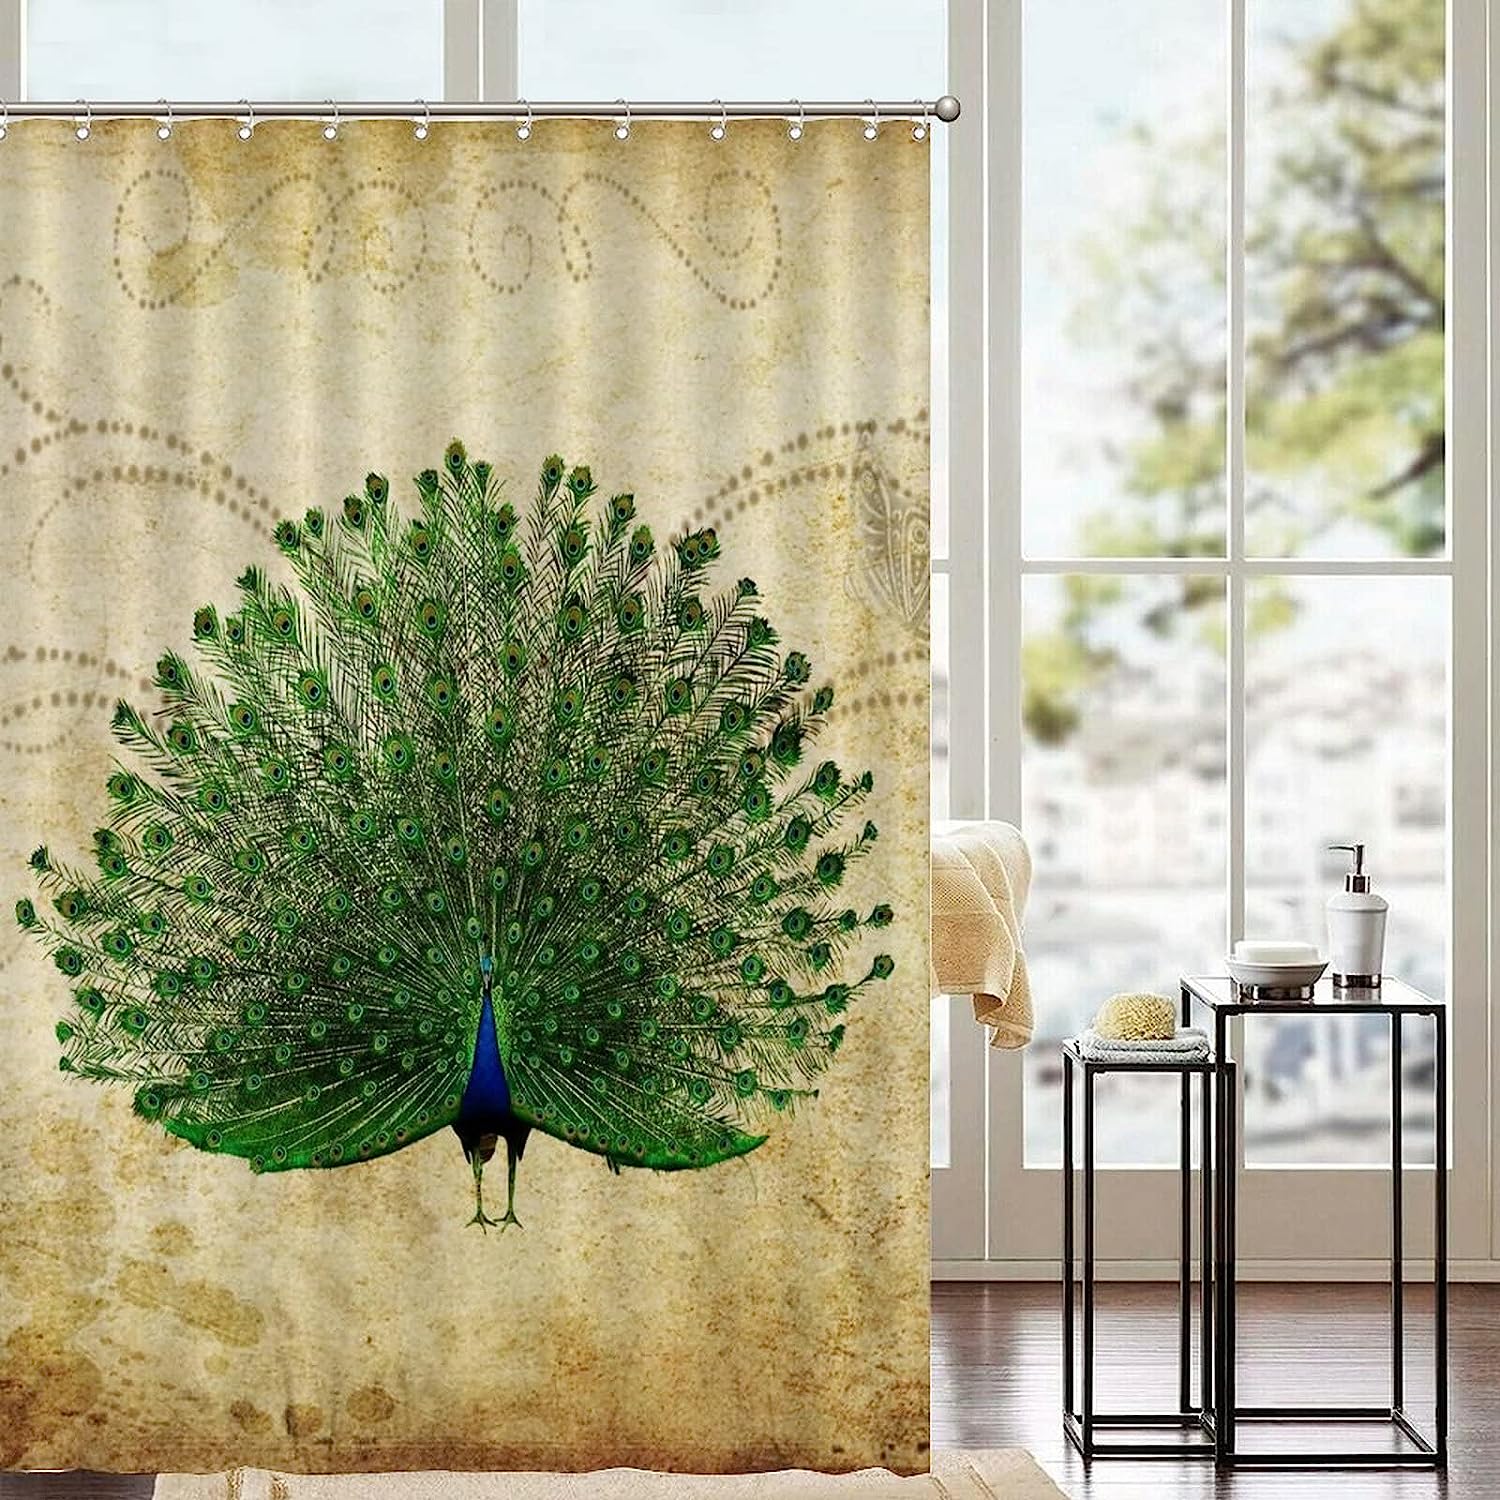 Retro Peacock Shower Curtain Liner Set Review